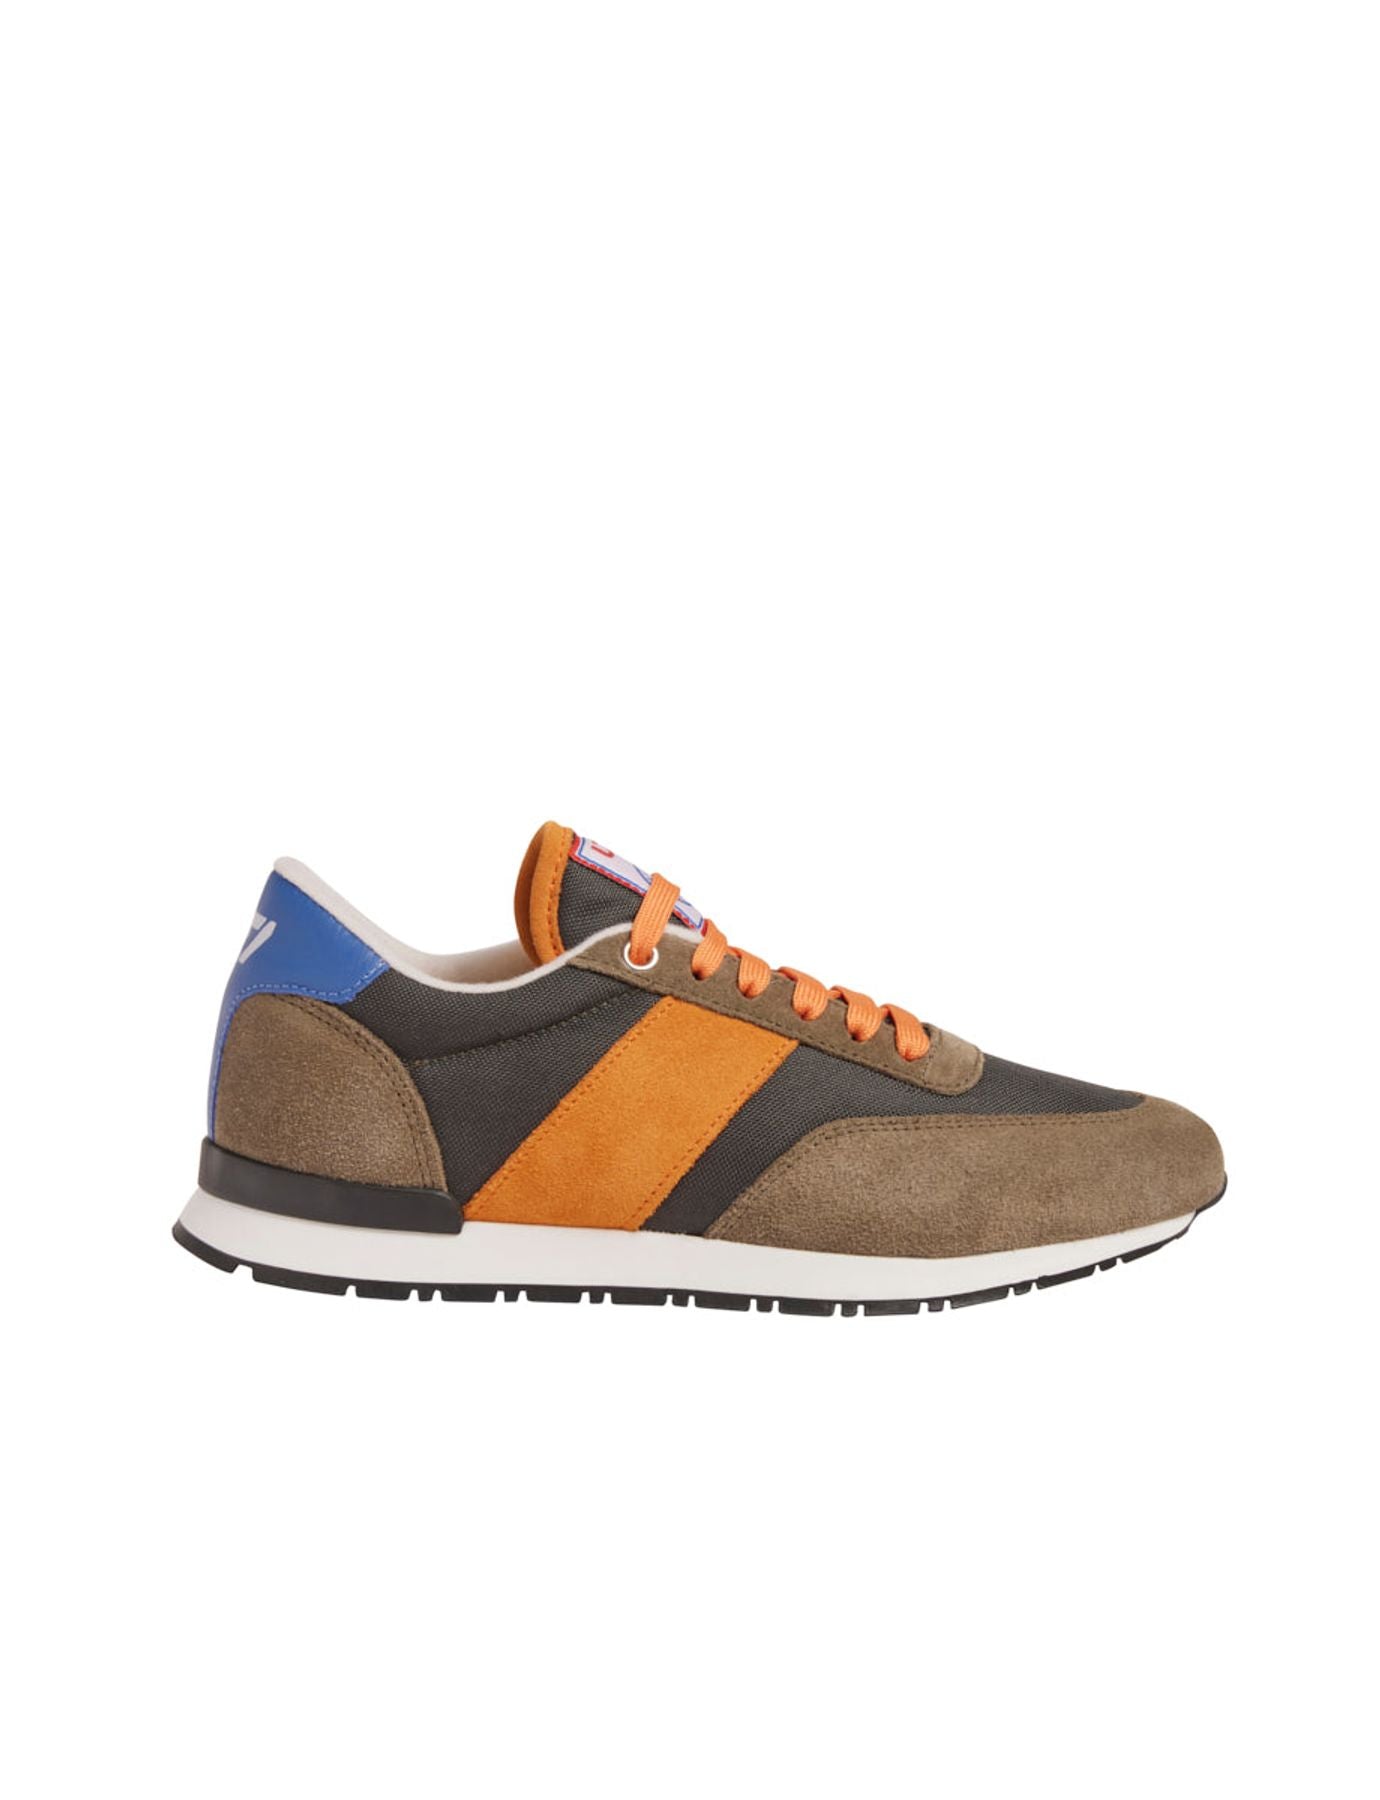 sneakers-77-quot-unisex-kaki-orange-blue-uzs-x-ines